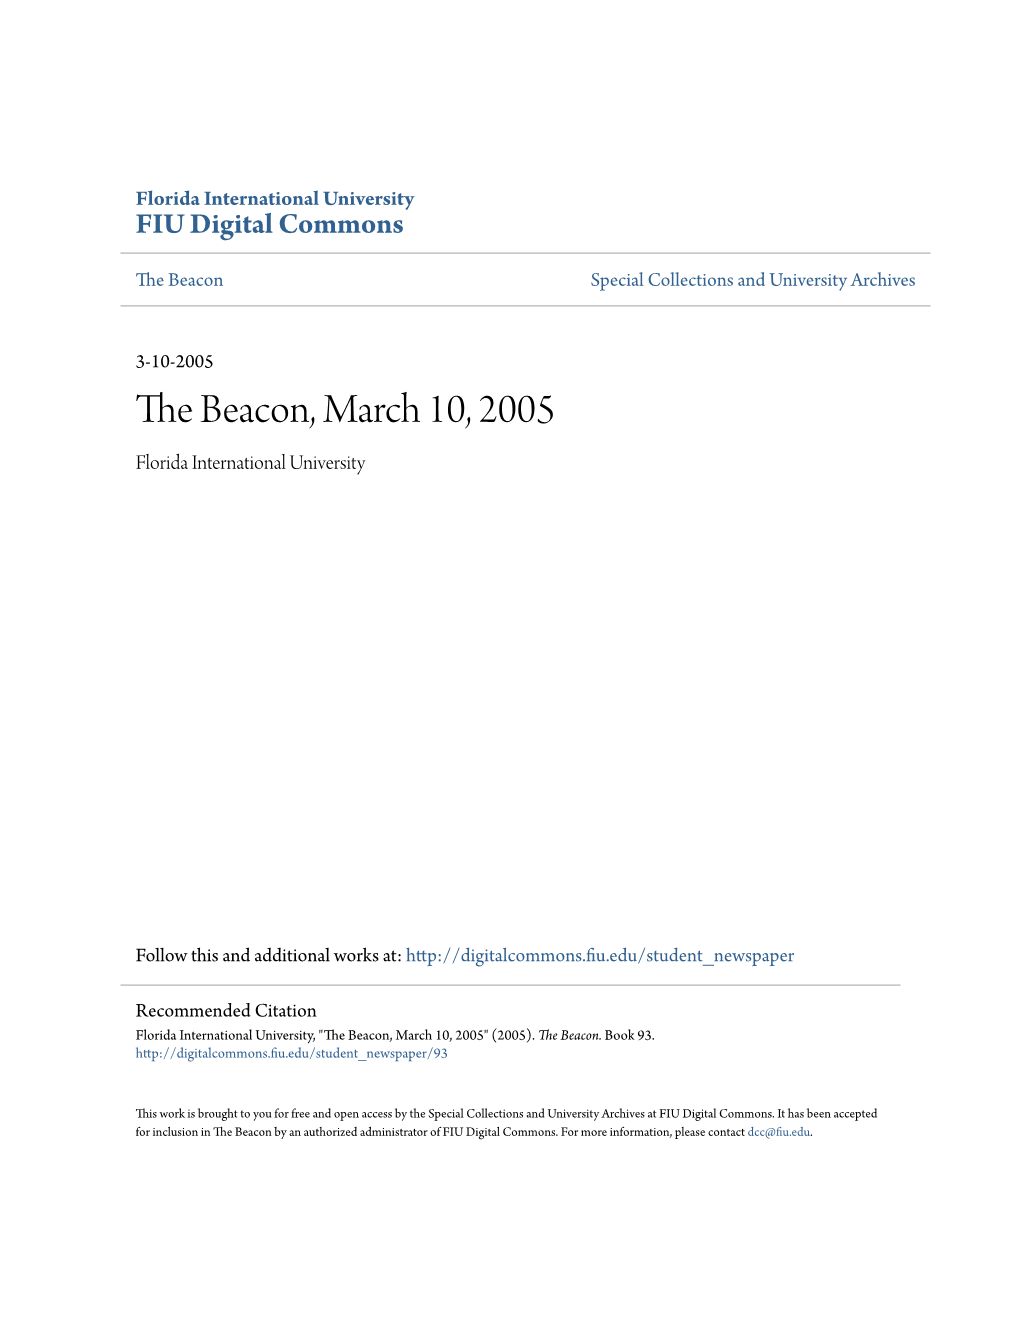 The Beacon, March 10, 2005 Florida International University